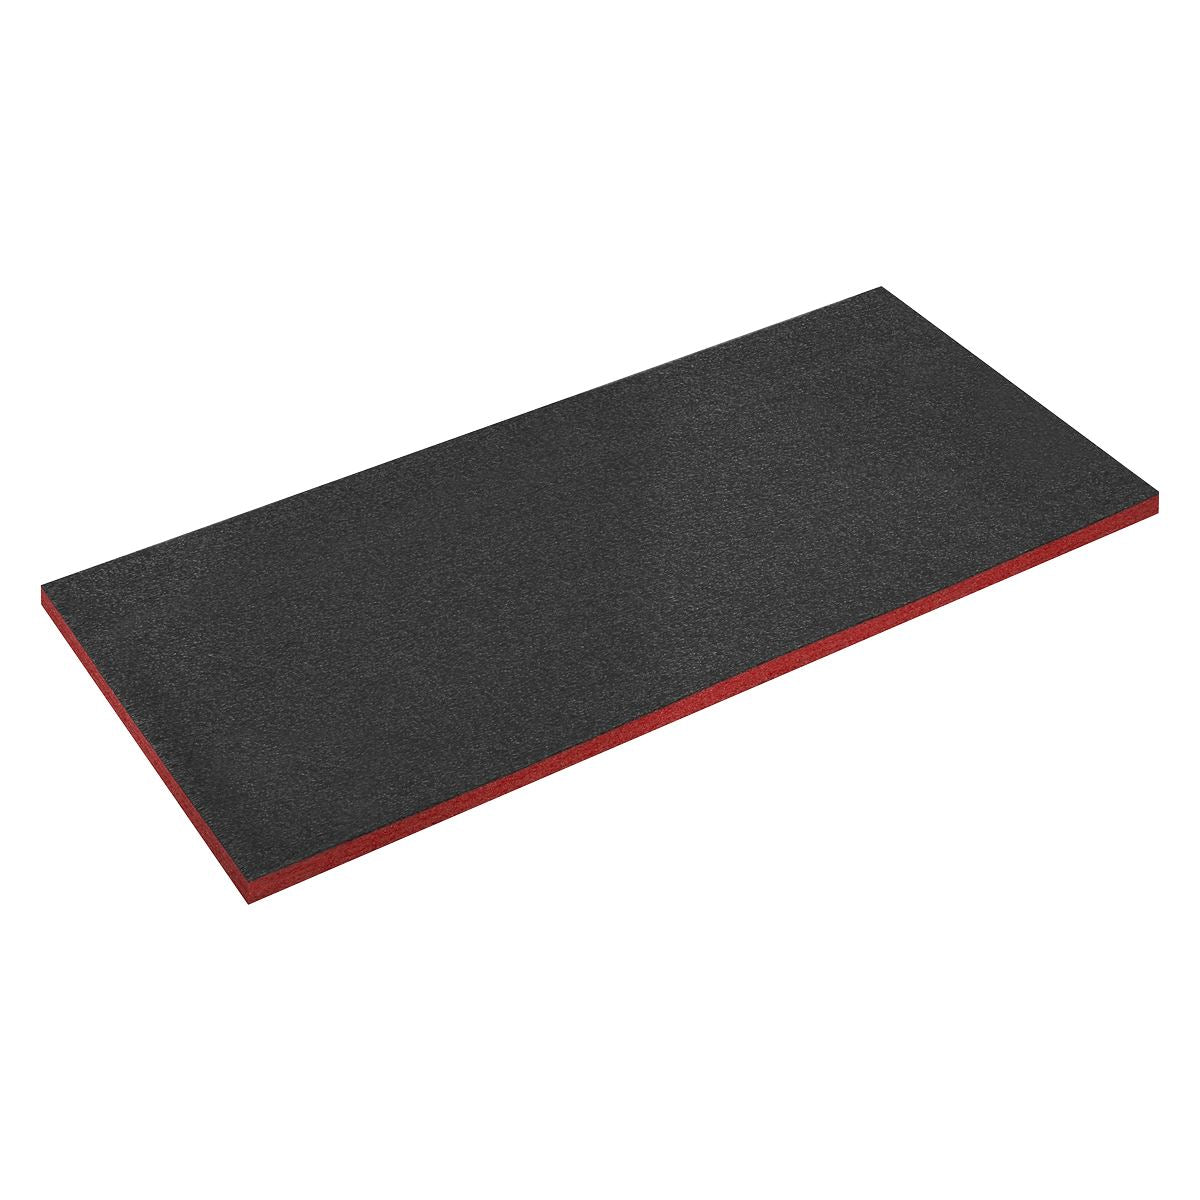 Sealey Easy Peel Shadow Foam Red Black 1200 x 550 x 30mm Tool Tray Insert